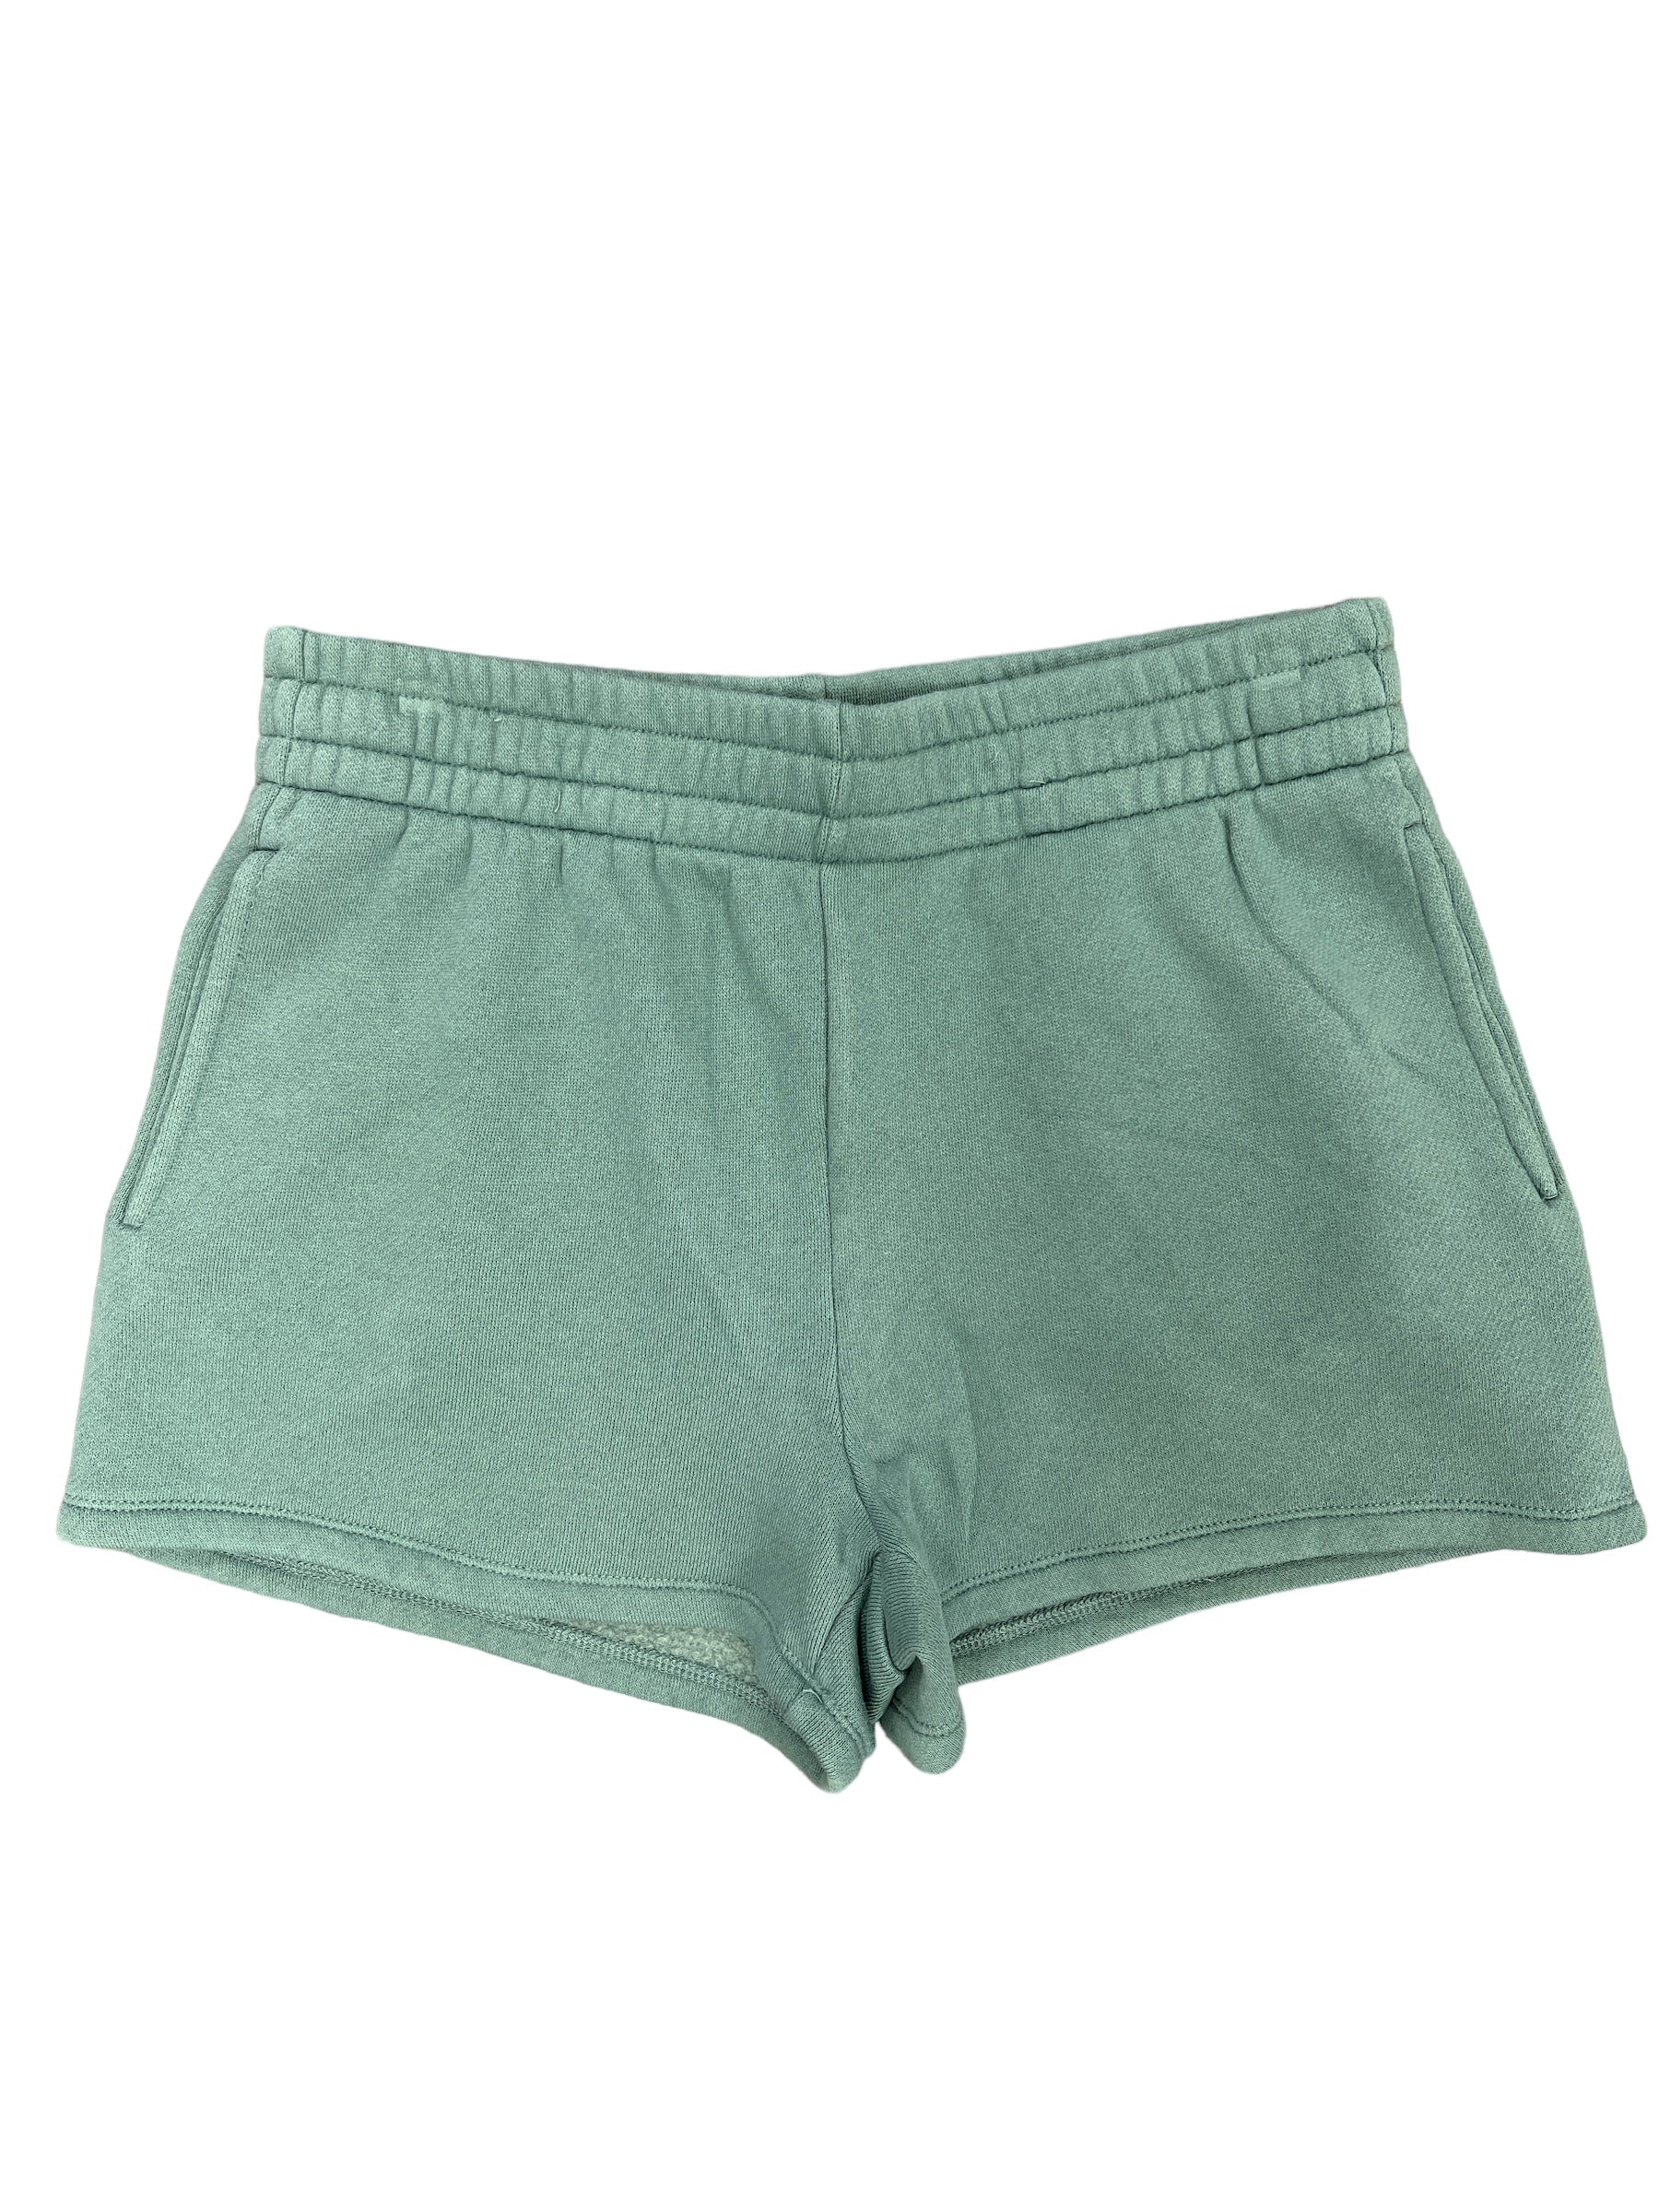 Sporty Fleece Shorts-220 Skirts/Shorts-Simply Stylish Boutique-Simply Stylish Boutique | Women’s & Kid’s Fashion | Paducah, KY